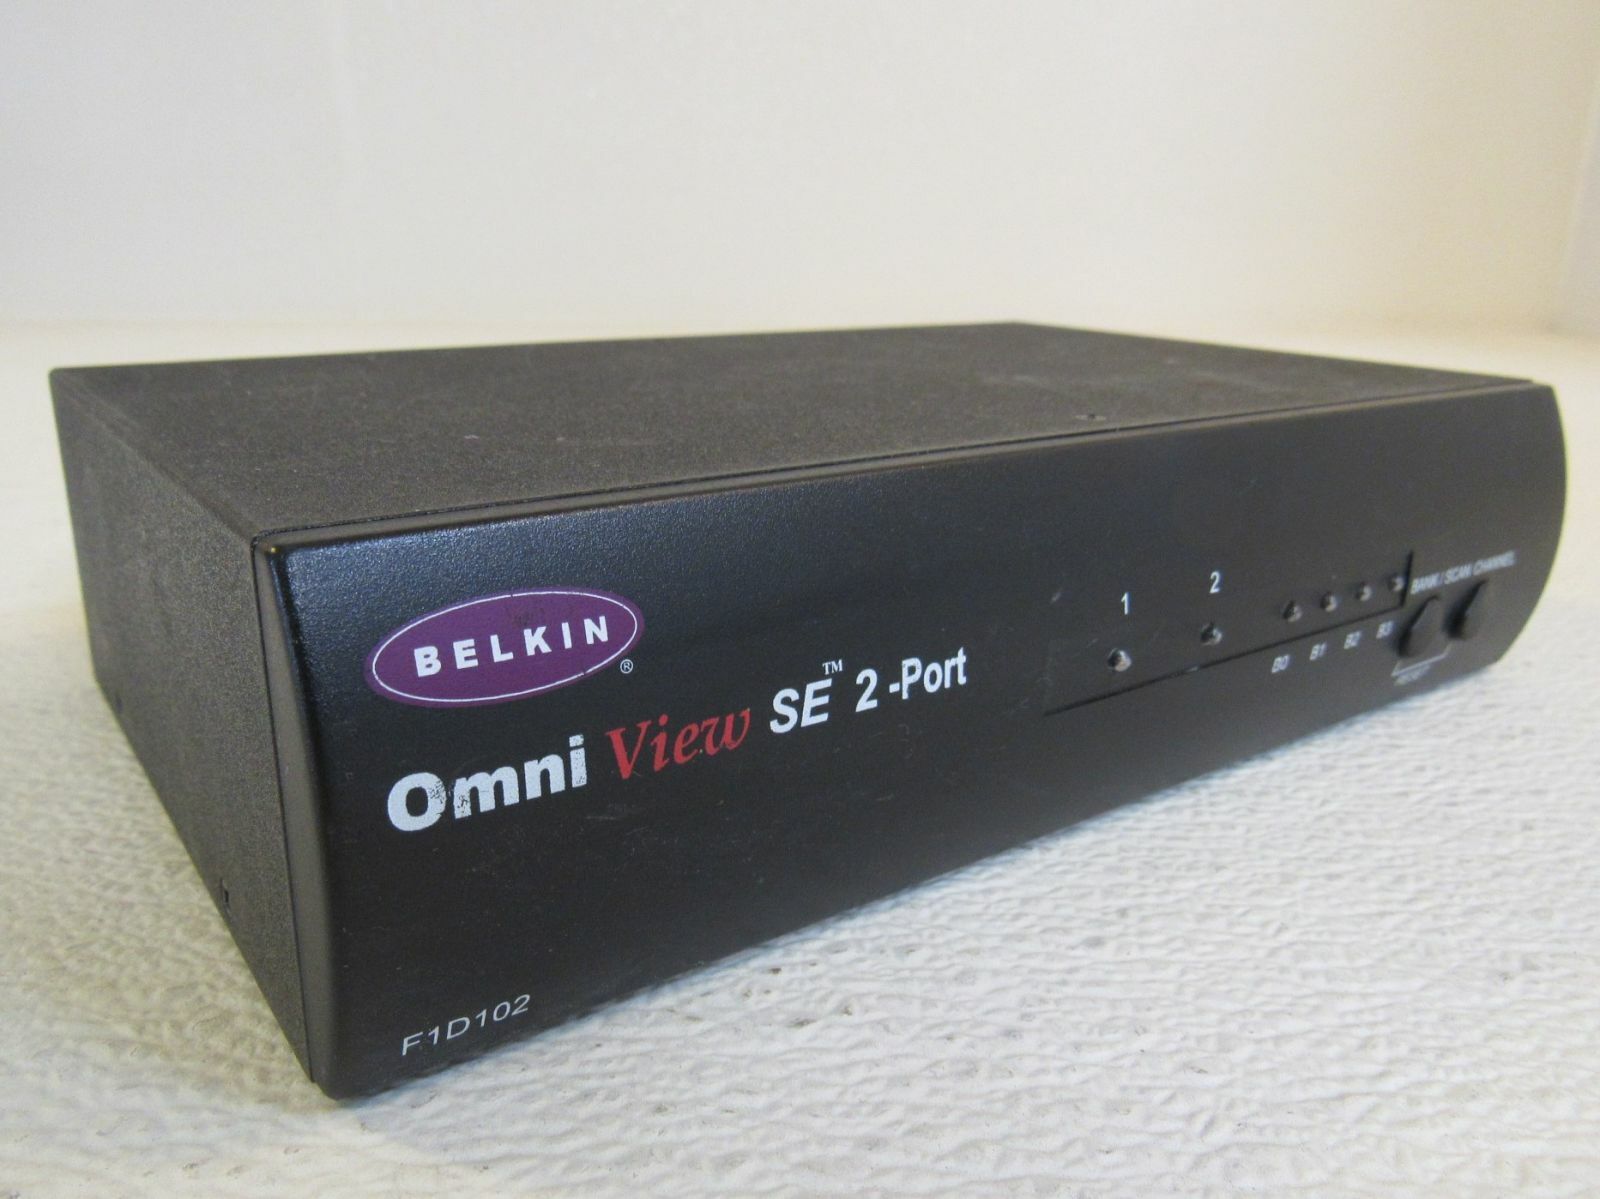 Belkin Omni View KVM SE 2-Port Switch Control F1D102 Vintage